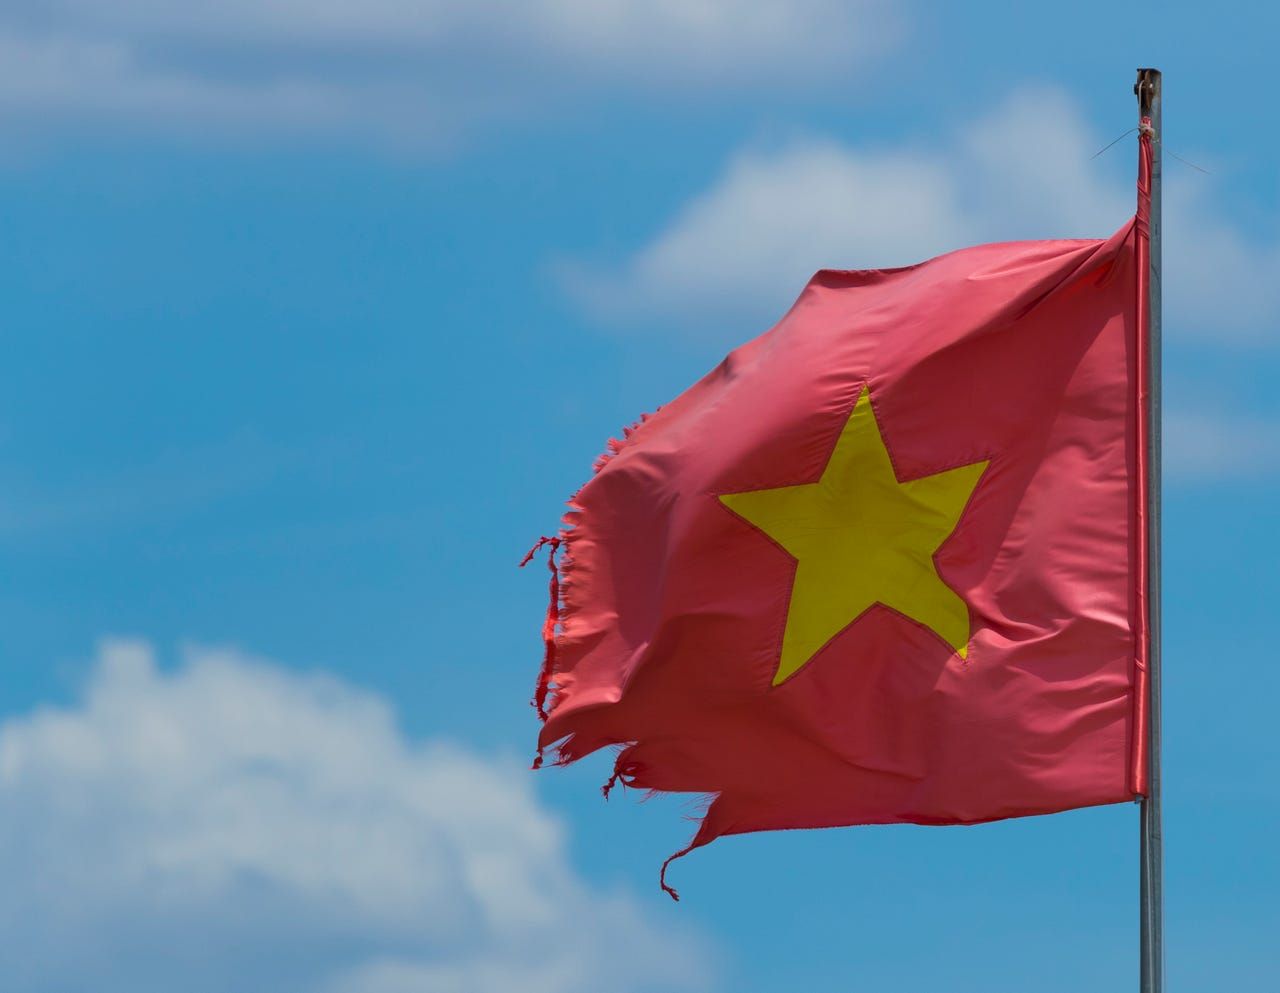 The Vietnamese flag flies at TH Milk's operations in Nghia Son, Vietnam. Image by Mark Hoffman. Vietnam, 2019.